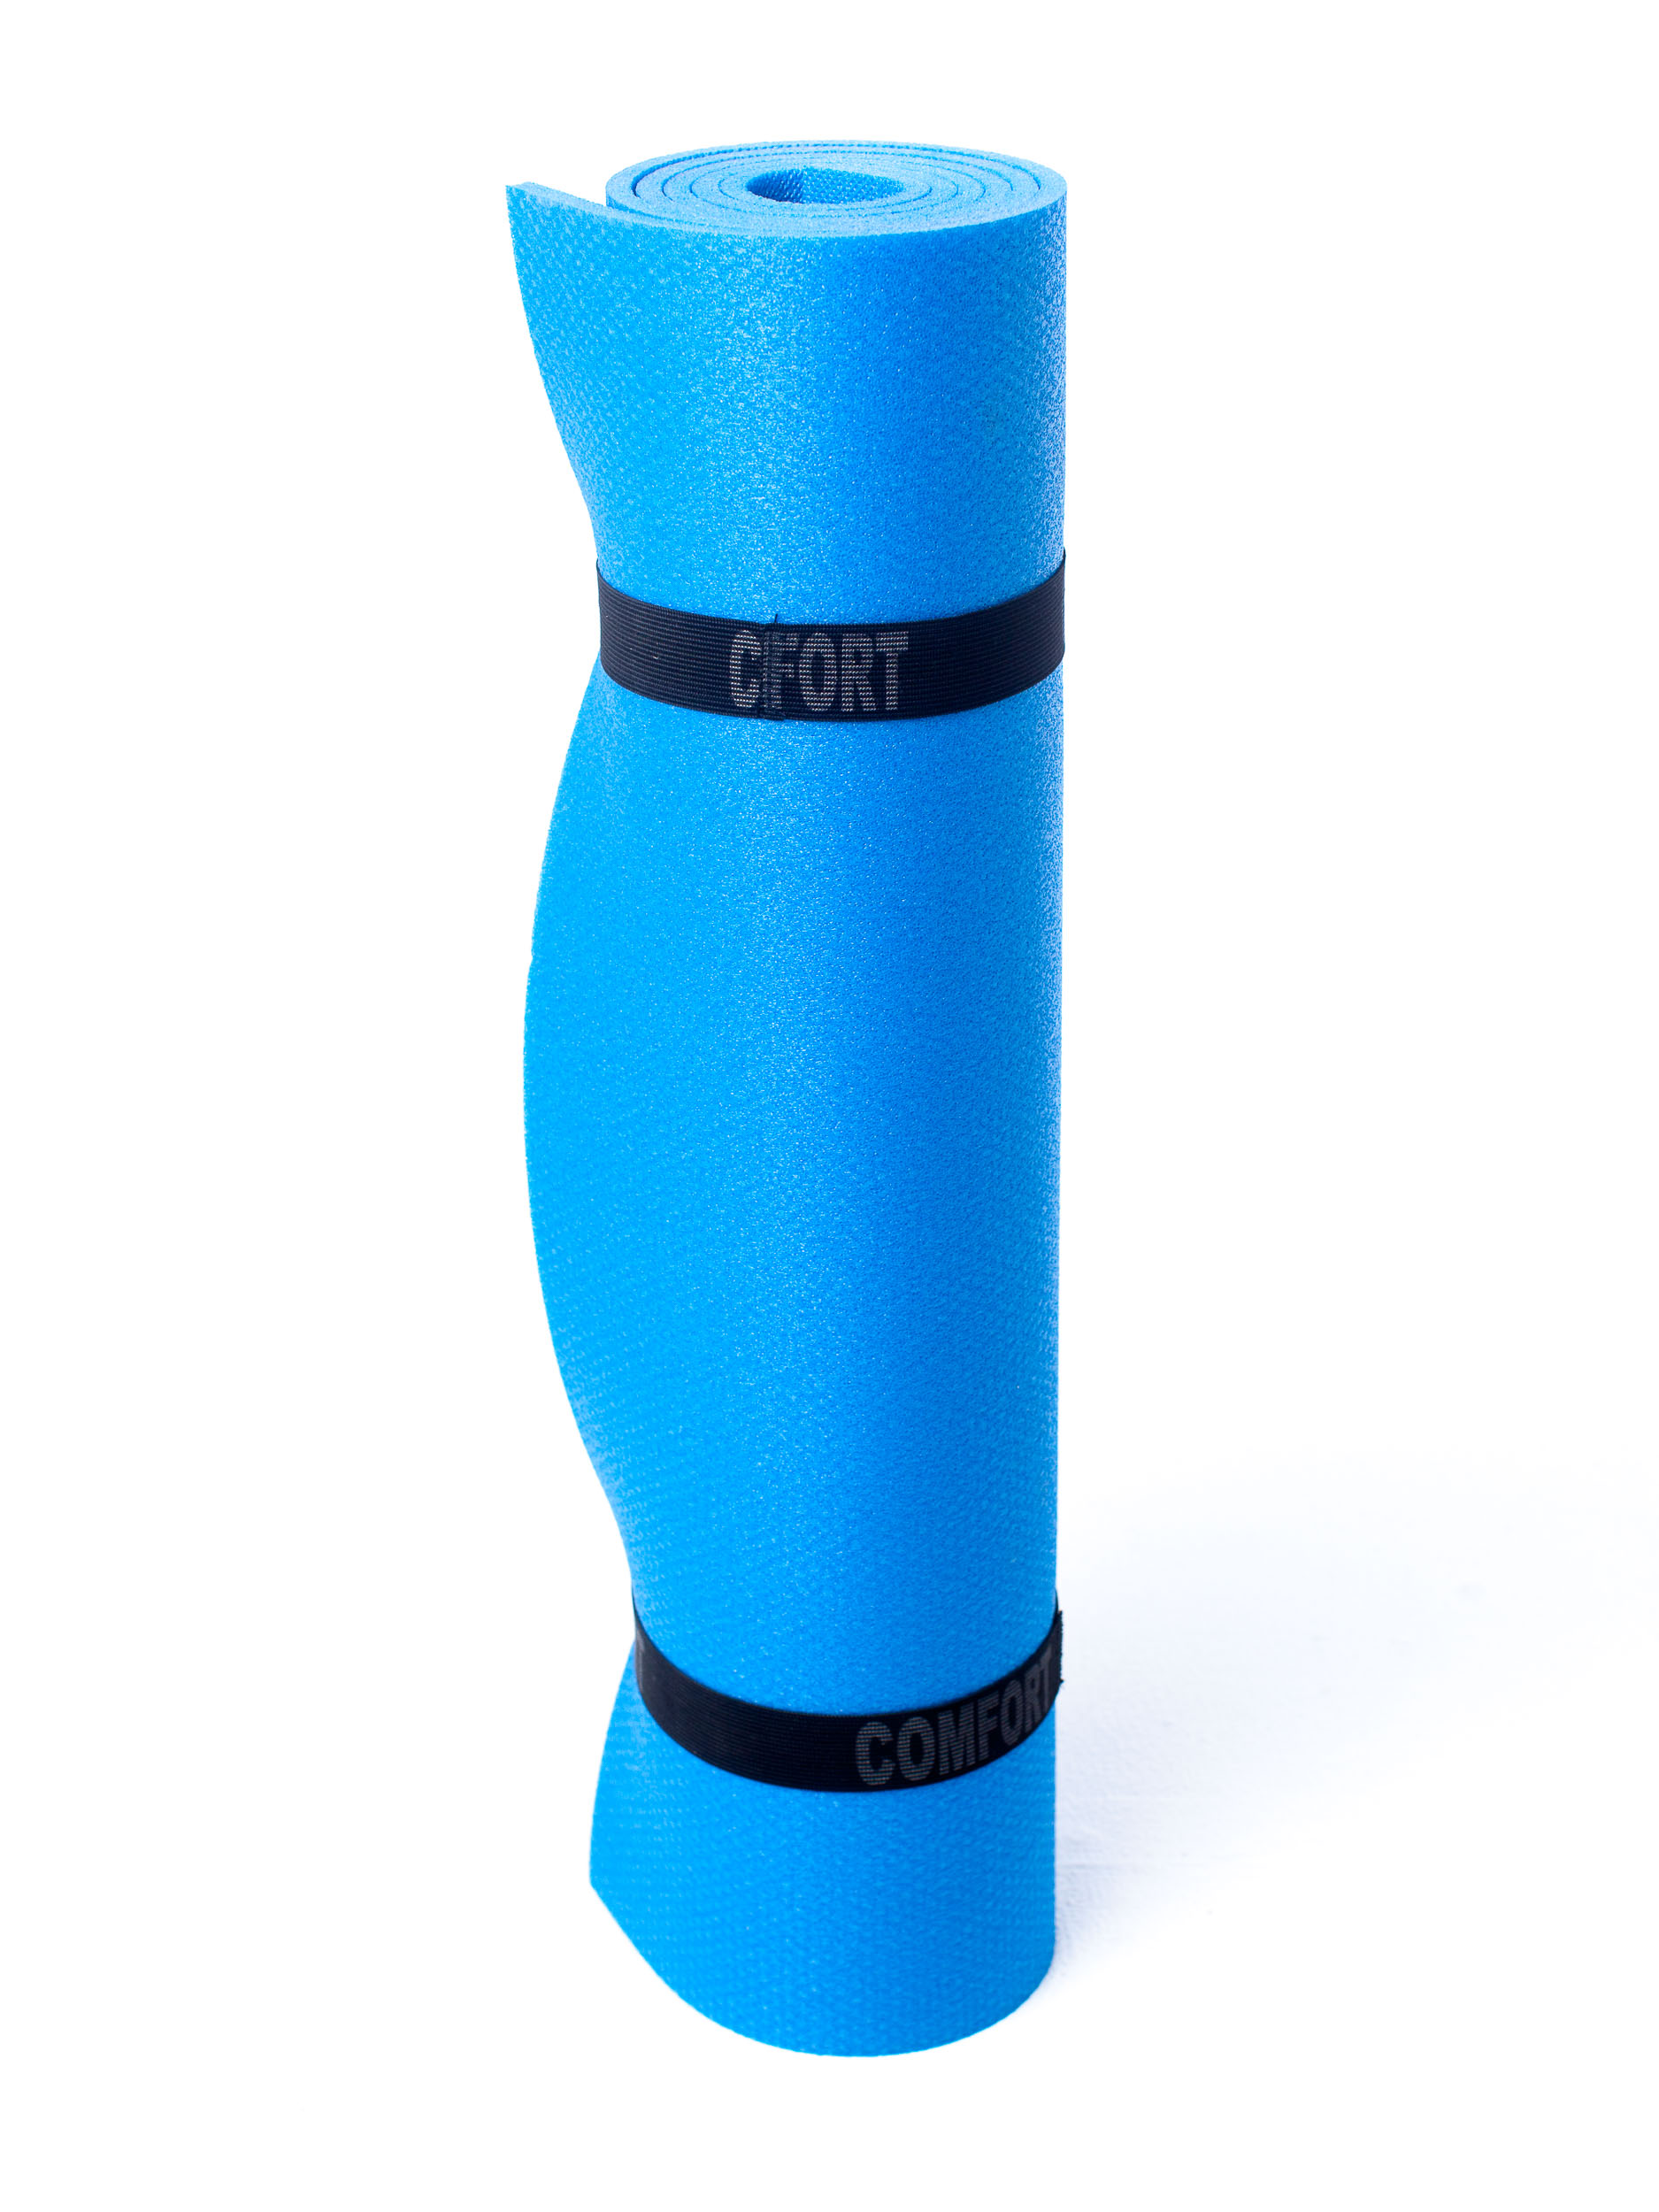 фото Коврик спортивно-туристический с рифлением comfort, цвет:синий, 1800x600x10 мм